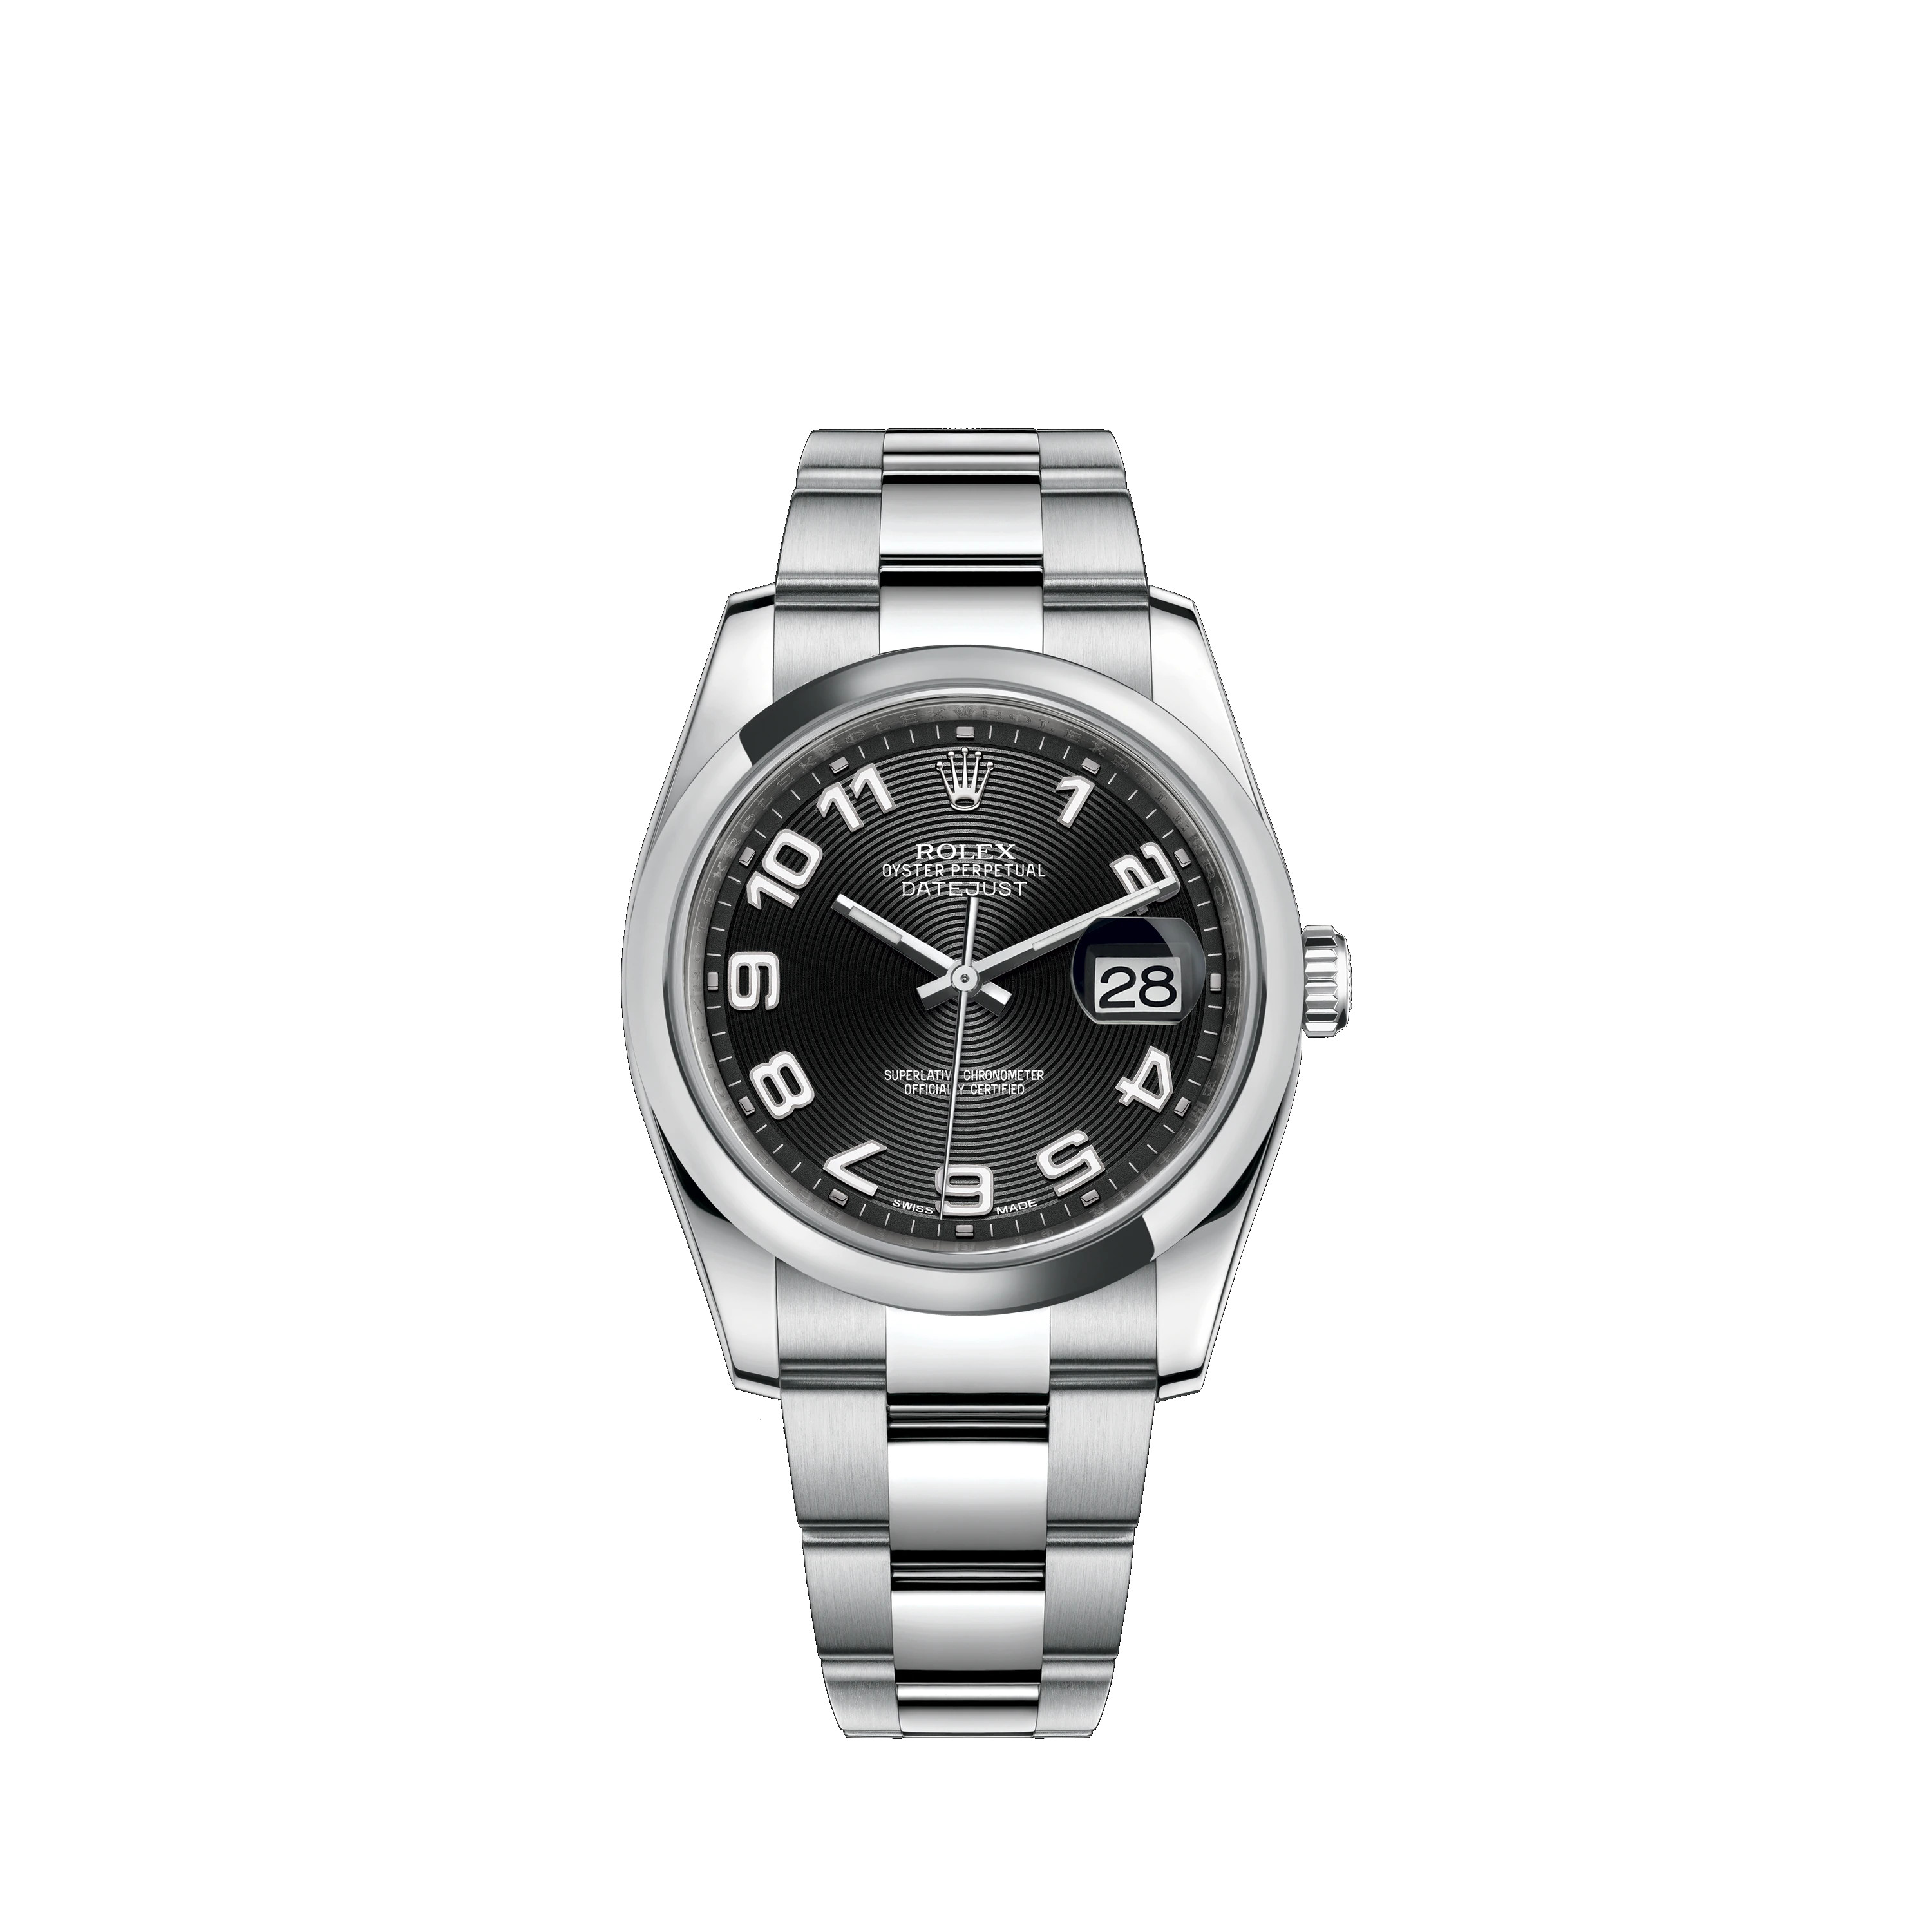 Datejust 36 116200 Stainless Steel Watch (Black)